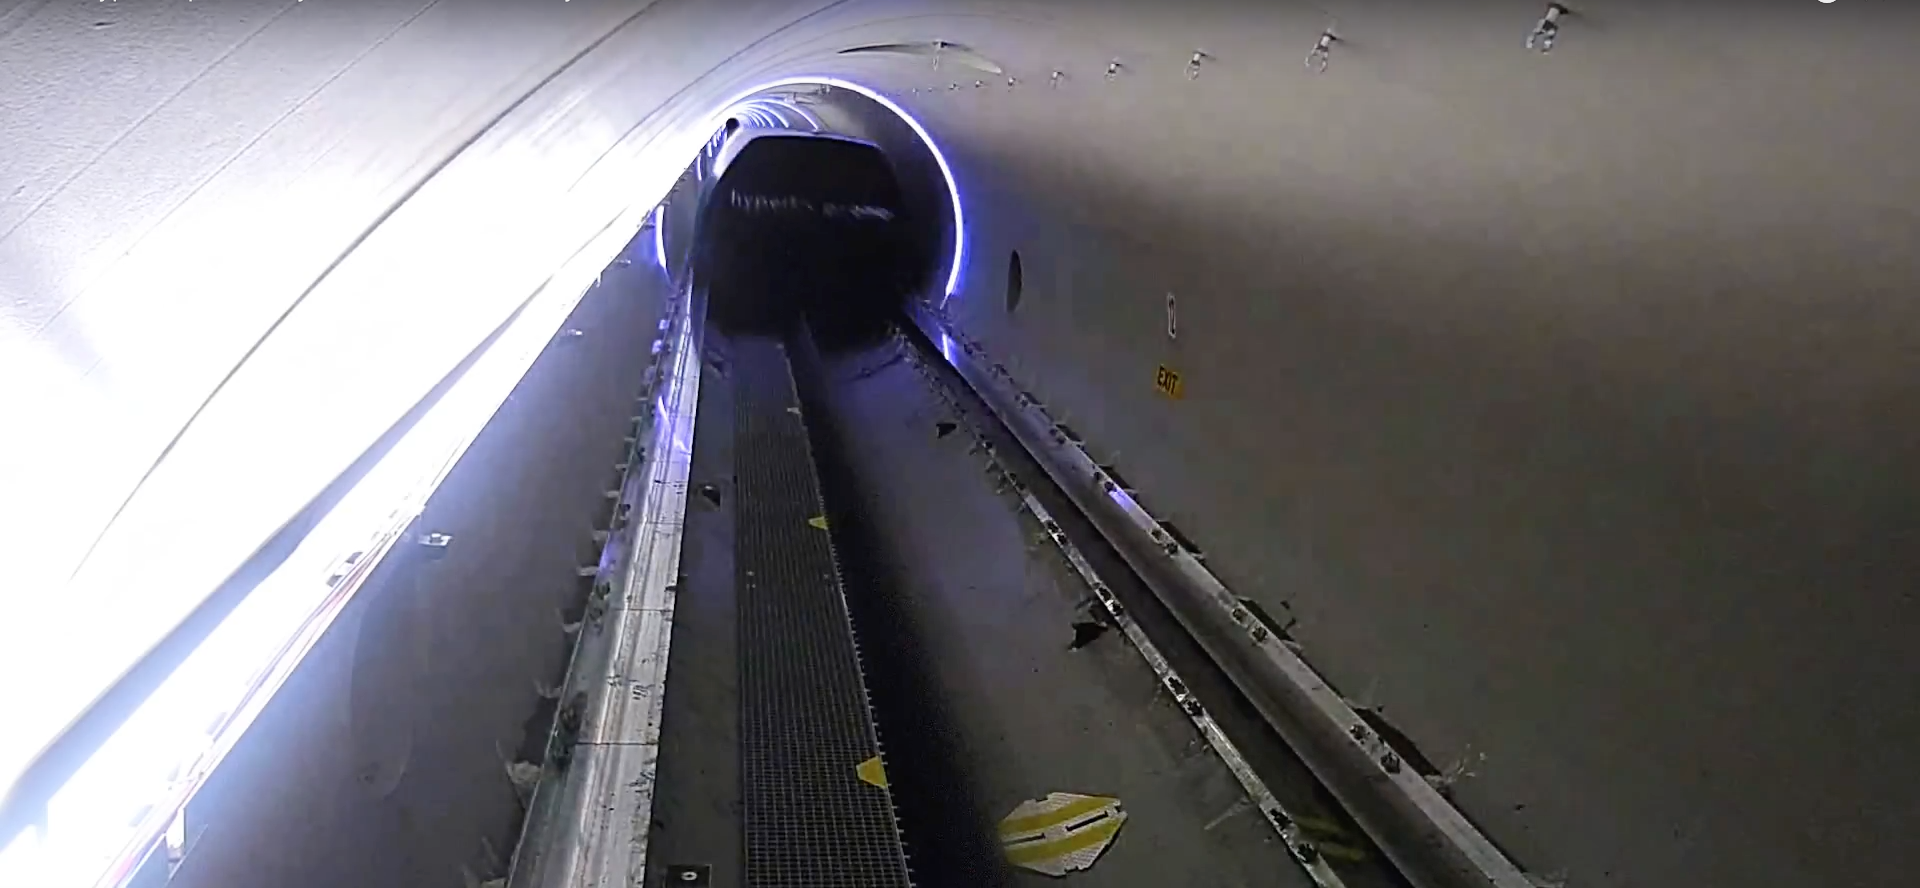 Hyplerloop pod in tunnel.